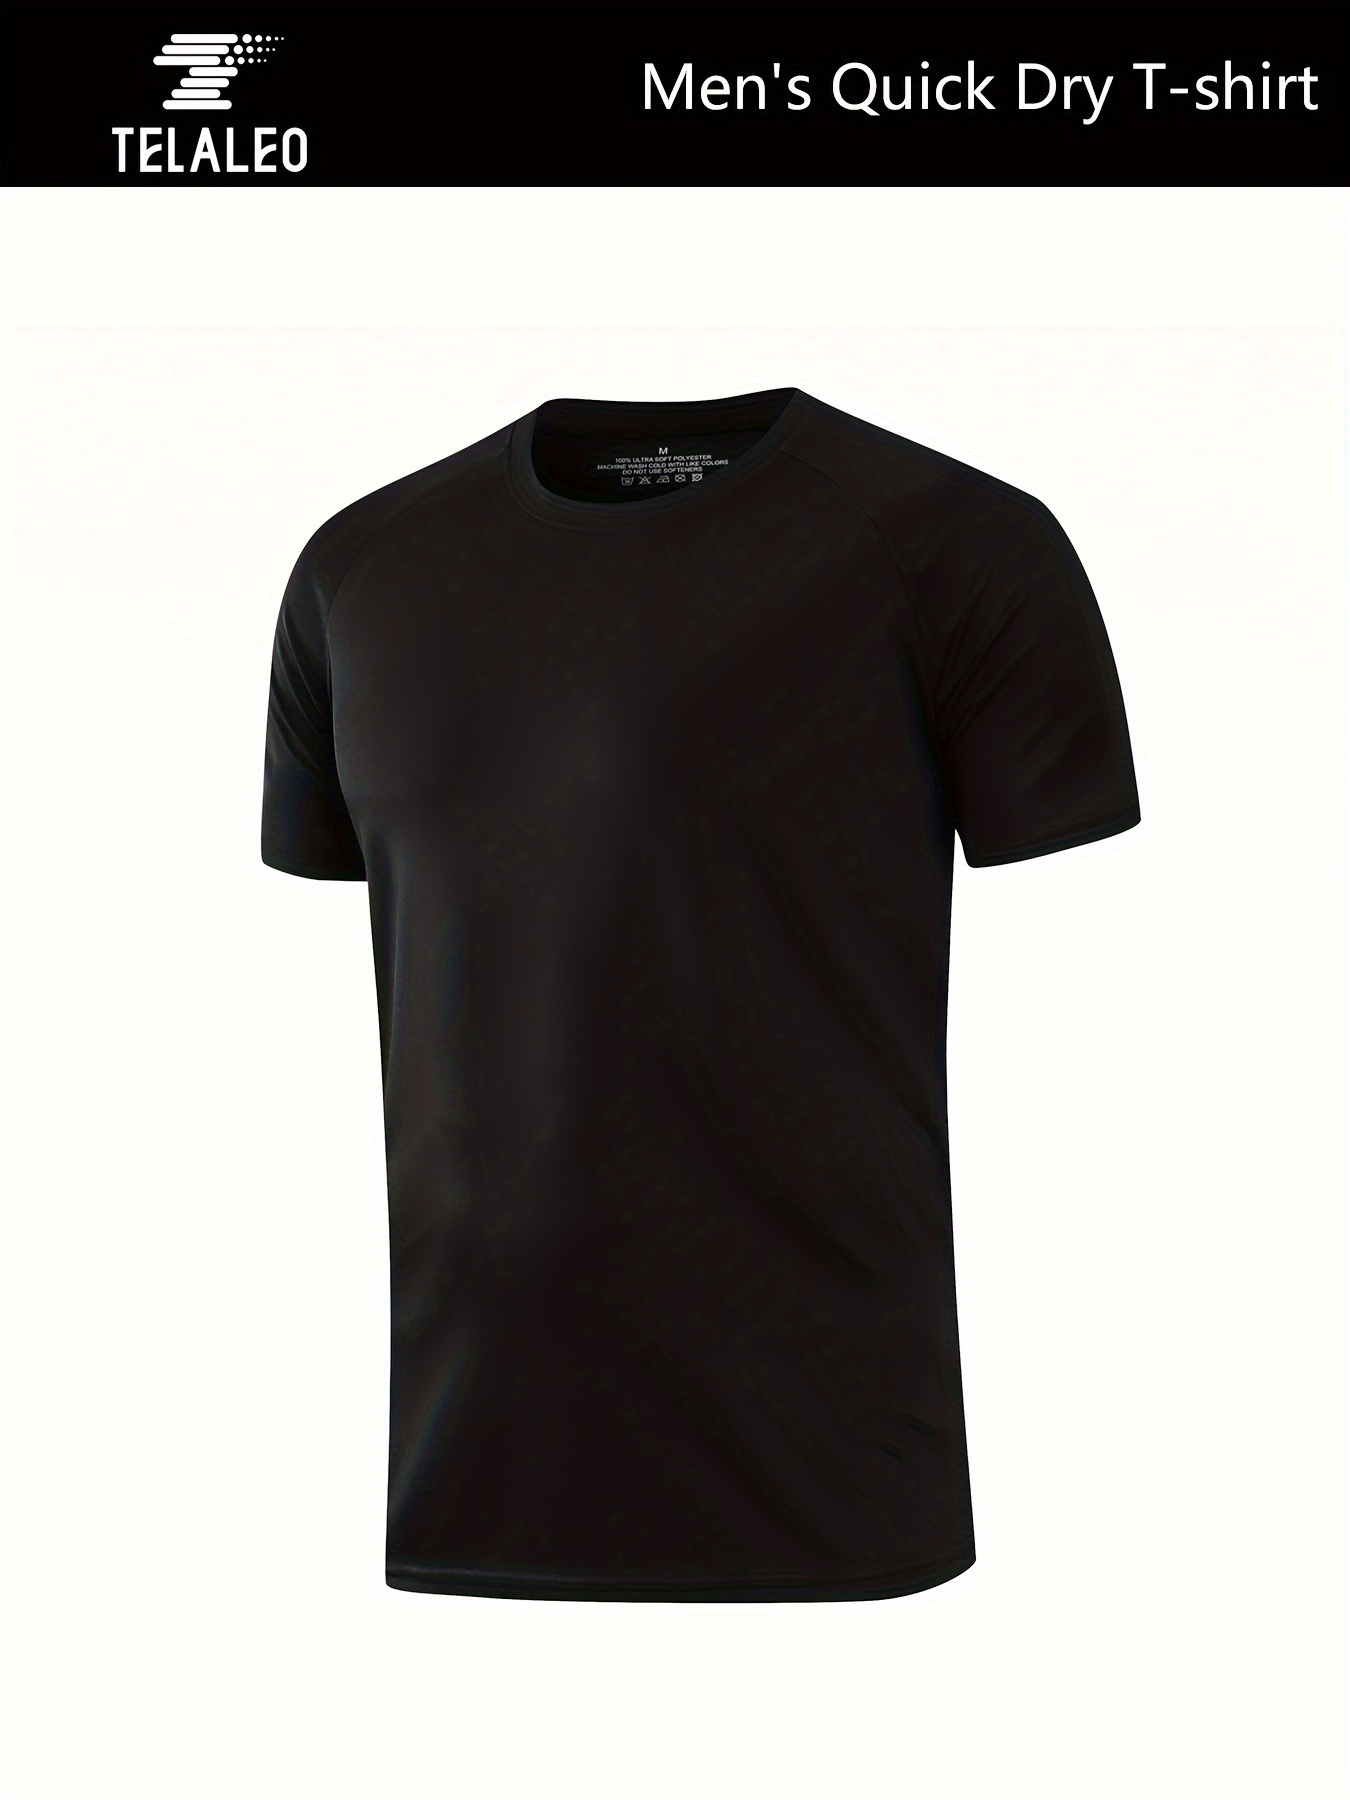 Short Sleeve Workout Shirts for Men